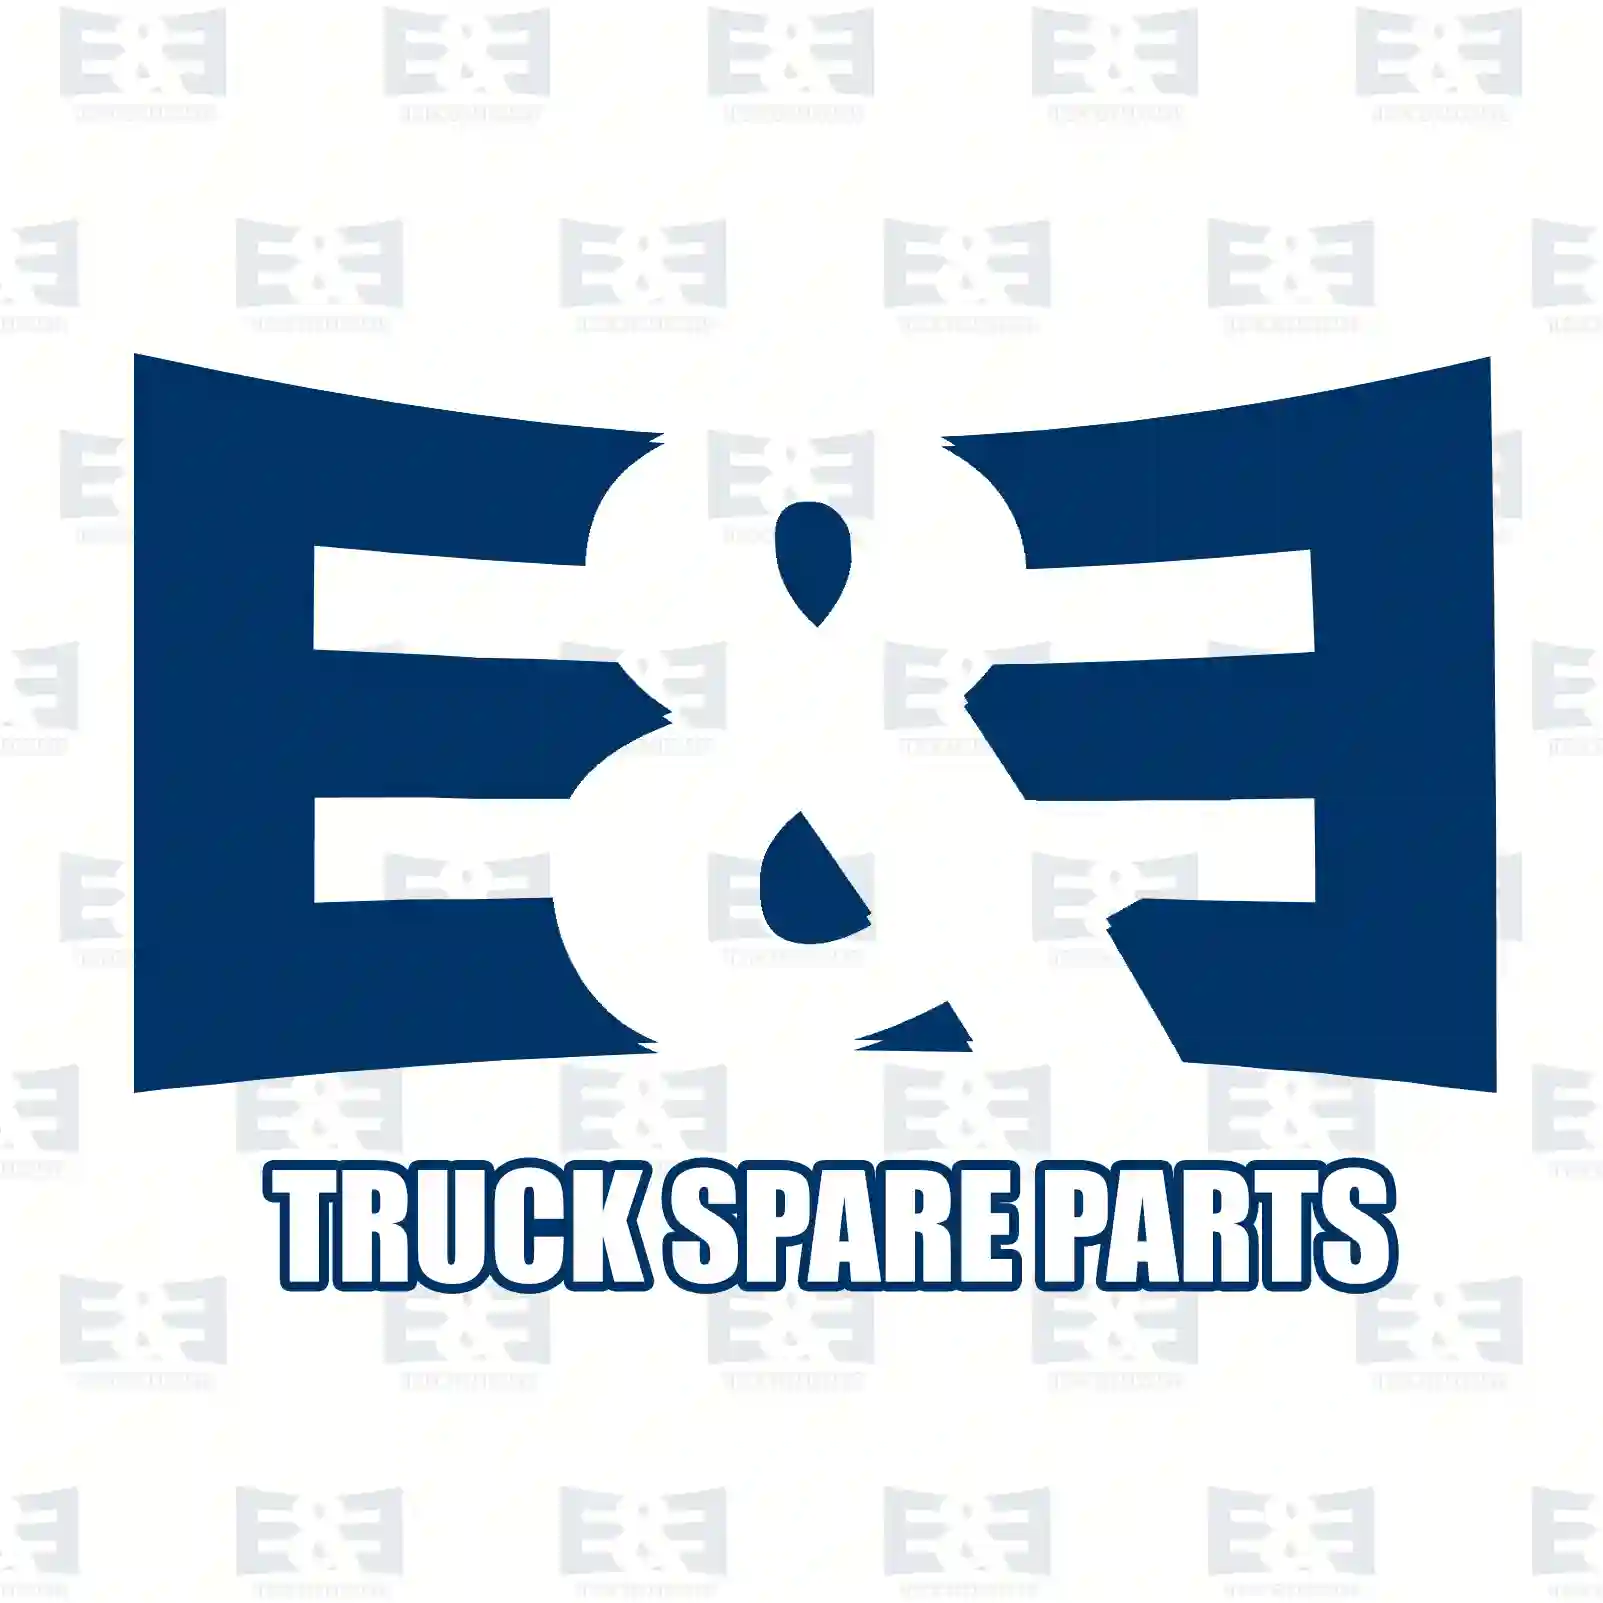 V-belt kit, 2E2203860, 04720512, 06580412233, 06580422233, 06580432233, 06580472233, 06580721332, 06580731332, 51968206023, 51968206046, 51968206058, 51968206086, 977319 ||  2E2203860 E&E Truck Spare Parts | Truck Spare Parts, Auotomotive Spare Parts V-belt kit, 2E2203860, 04720512, 06580412233, 06580422233, 06580432233, 06580472233, 06580721332, 06580731332, 51968206023, 51968206046, 51968206058, 51968206086, 977319 ||  2E2203860 E&E Truck Spare Parts | Truck Spare Parts, Auotomotive Spare Parts